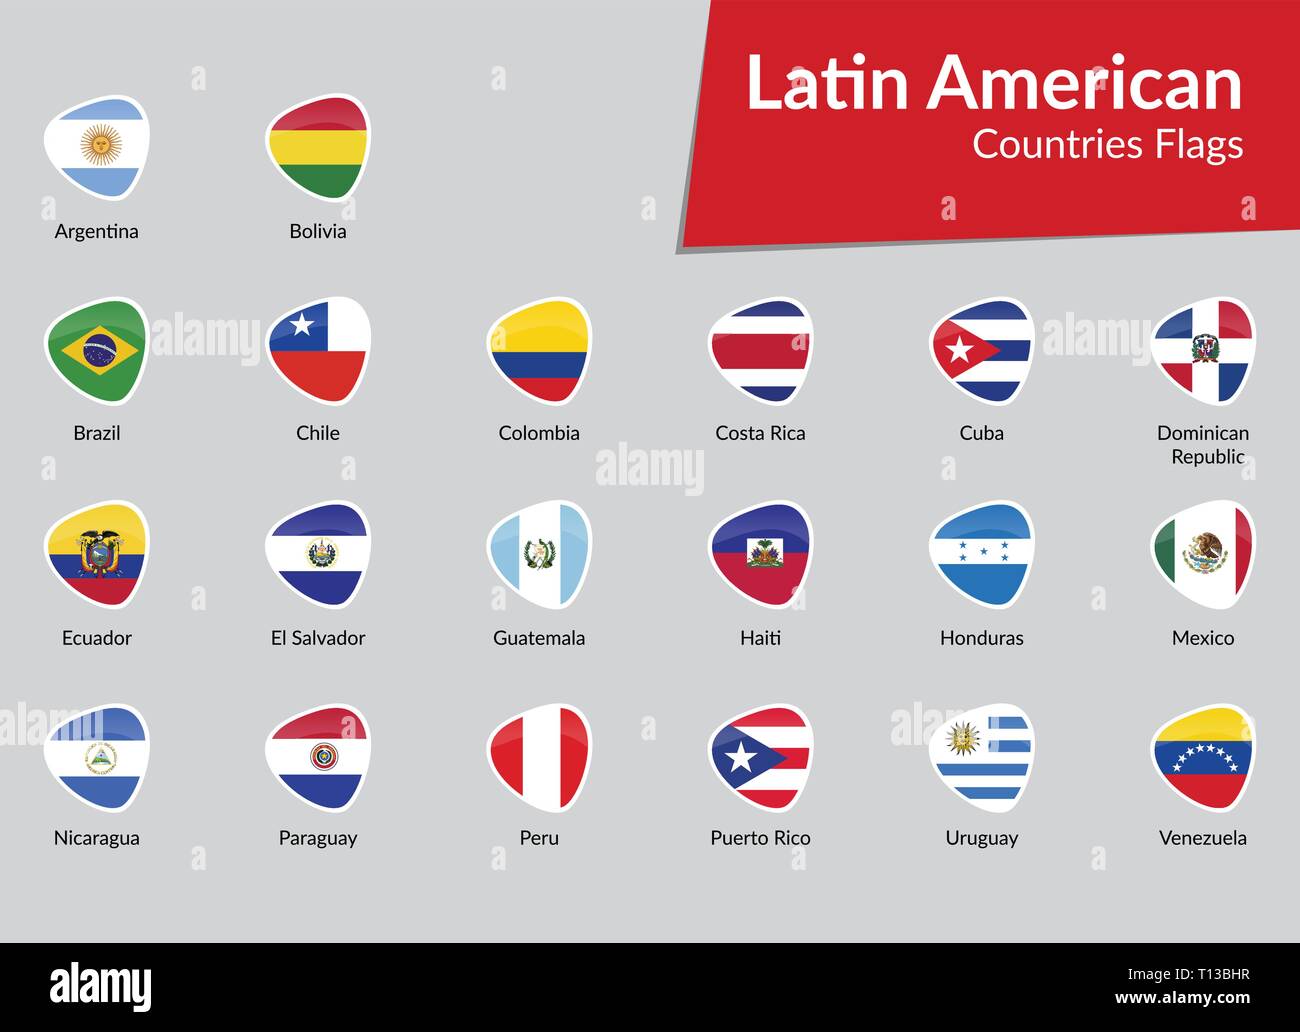 latin american Countries Flags vector icon collection Stock Vector